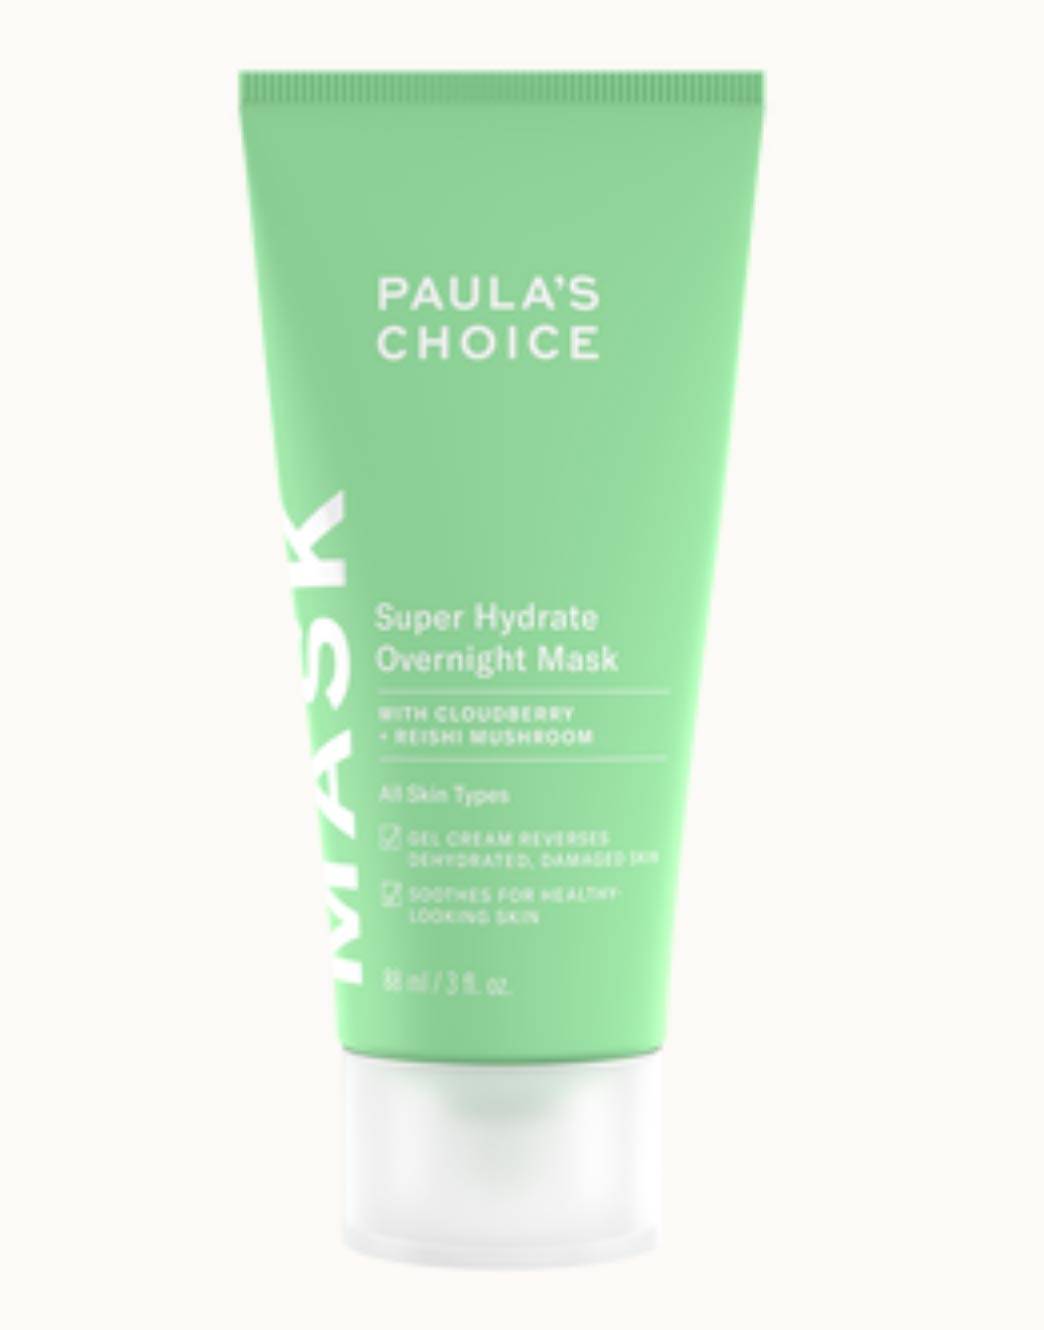 Super Hydrate Overnight Mask by Paula’s Choice 